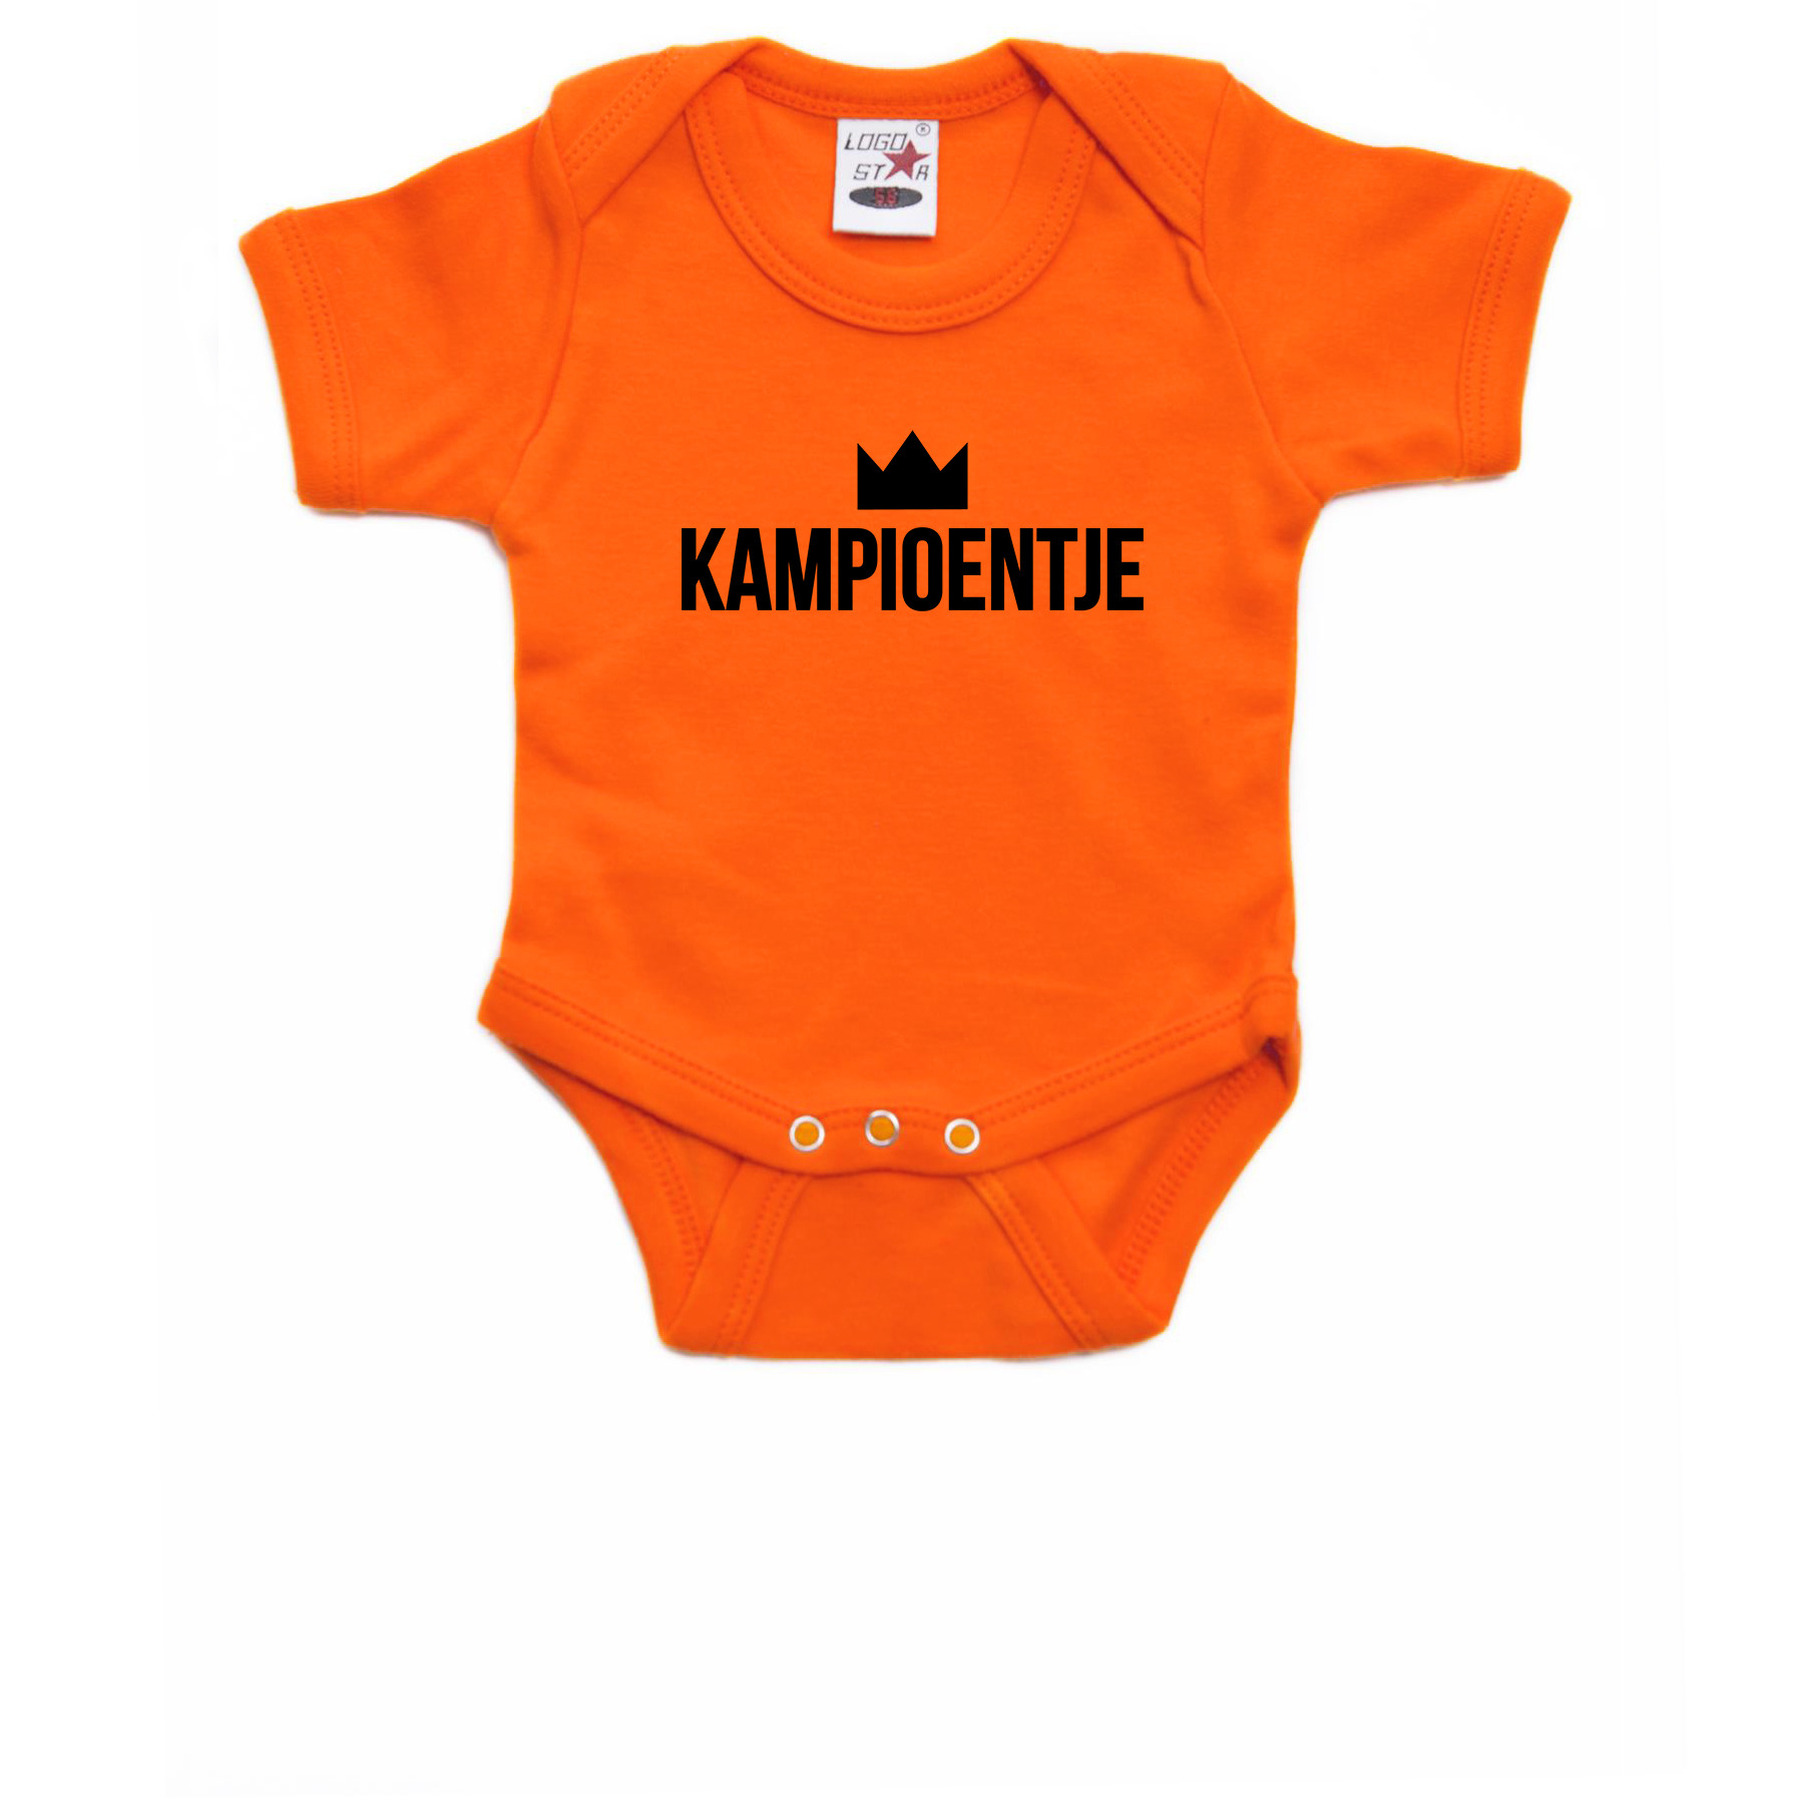 Kampioentje romper voor babys Holland - Nederland - EK - WK supporter